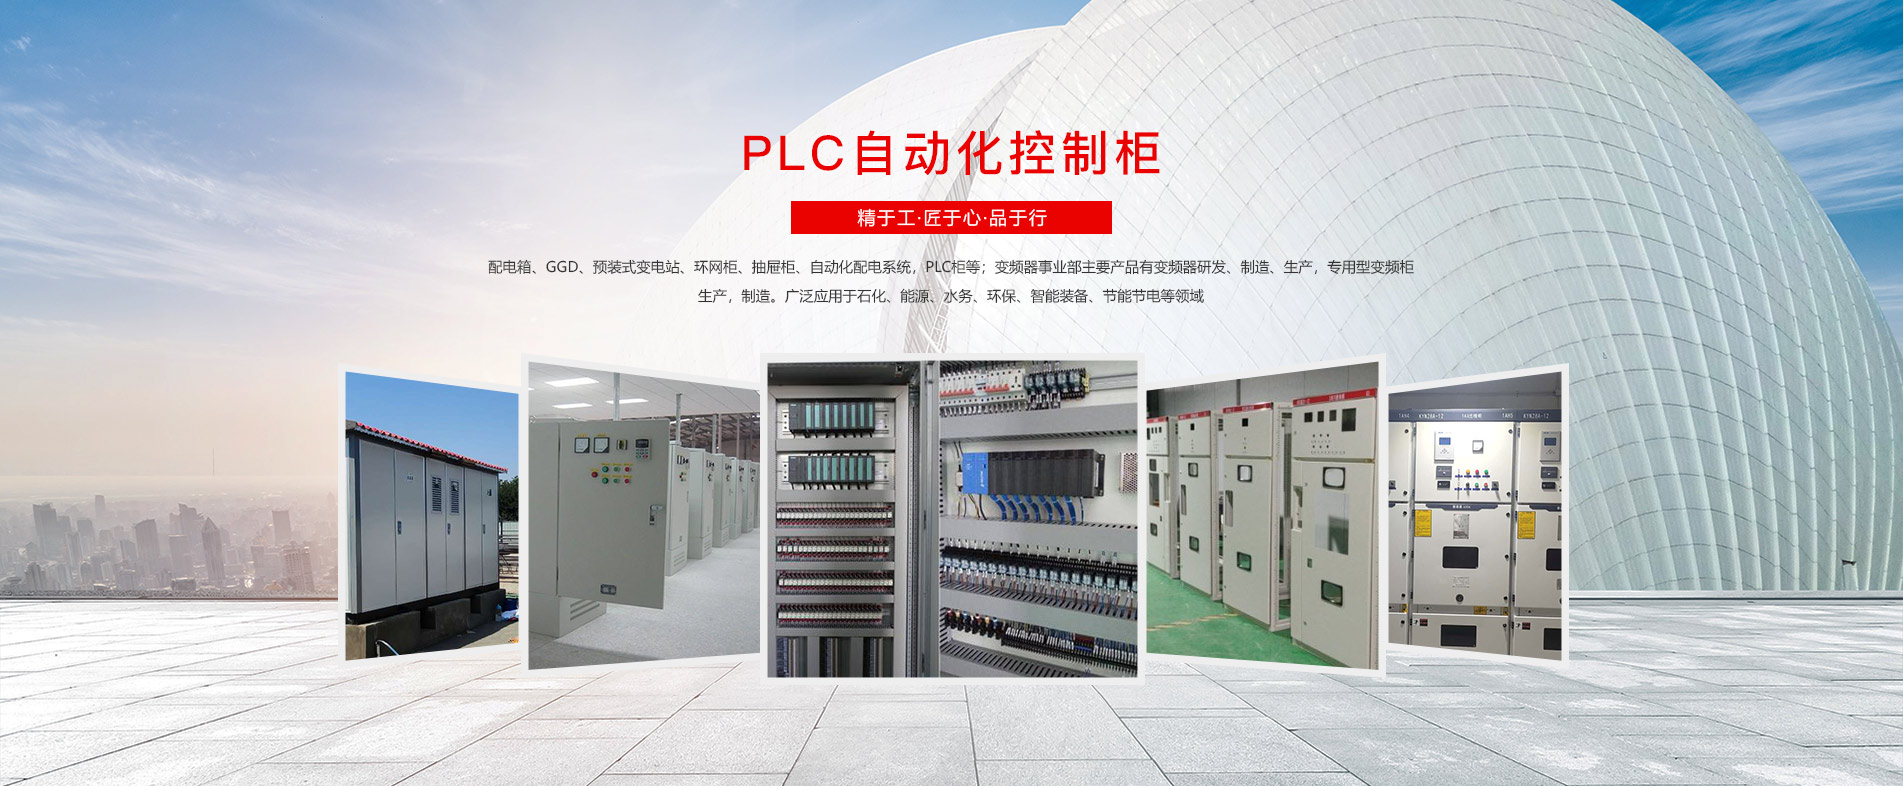 plc自动化控制系统